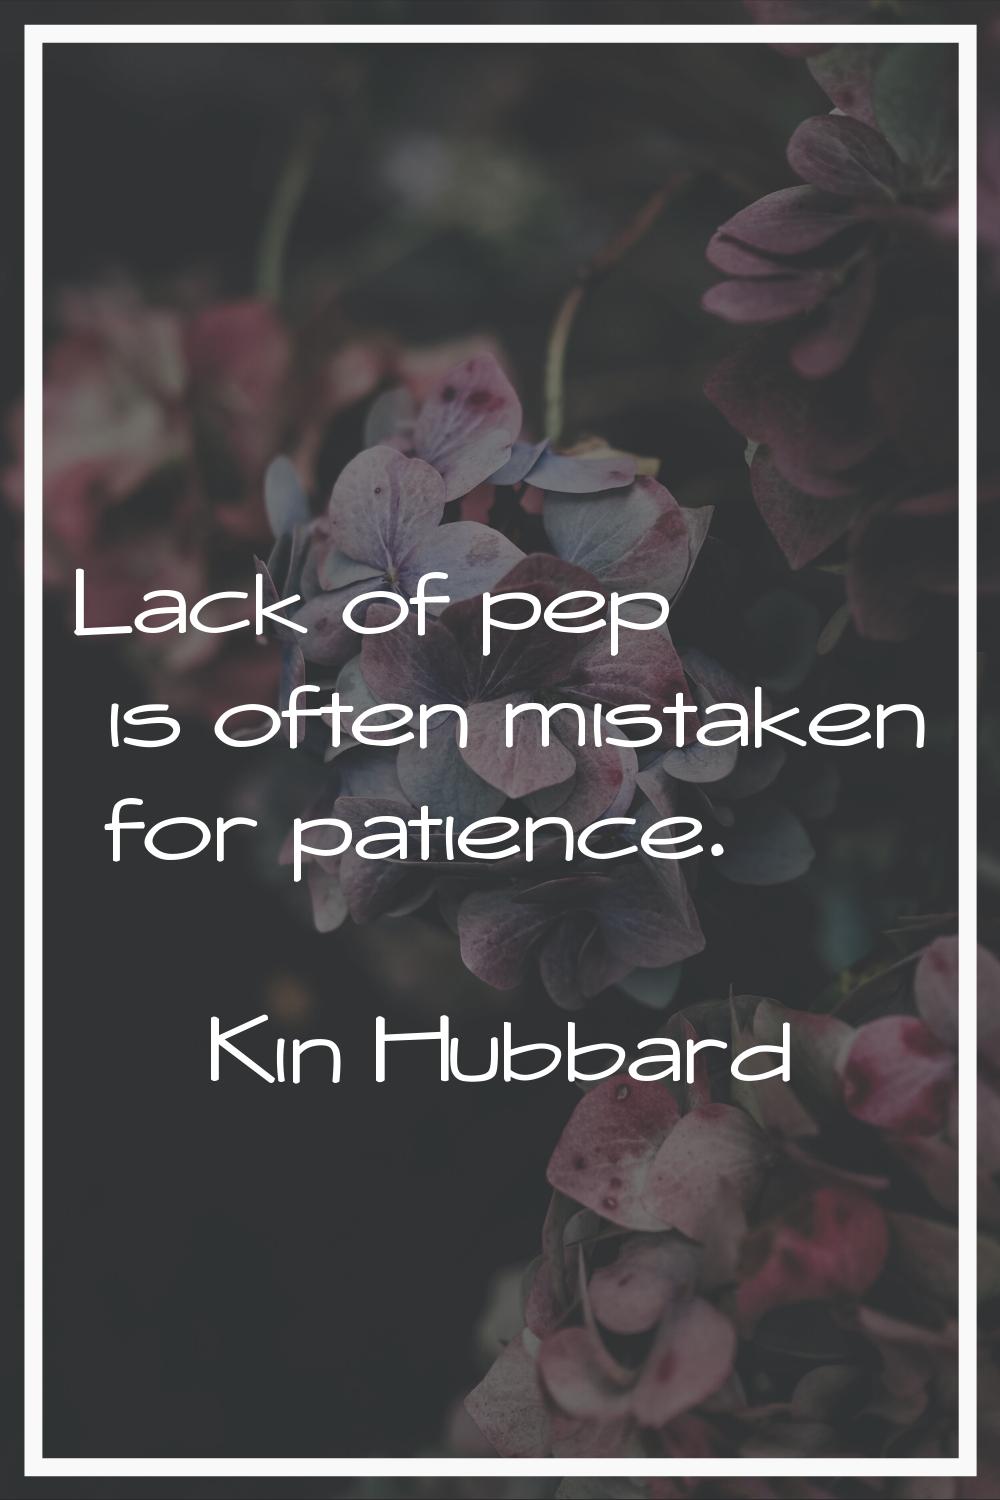 Lack of pep is often mistaken for patience.